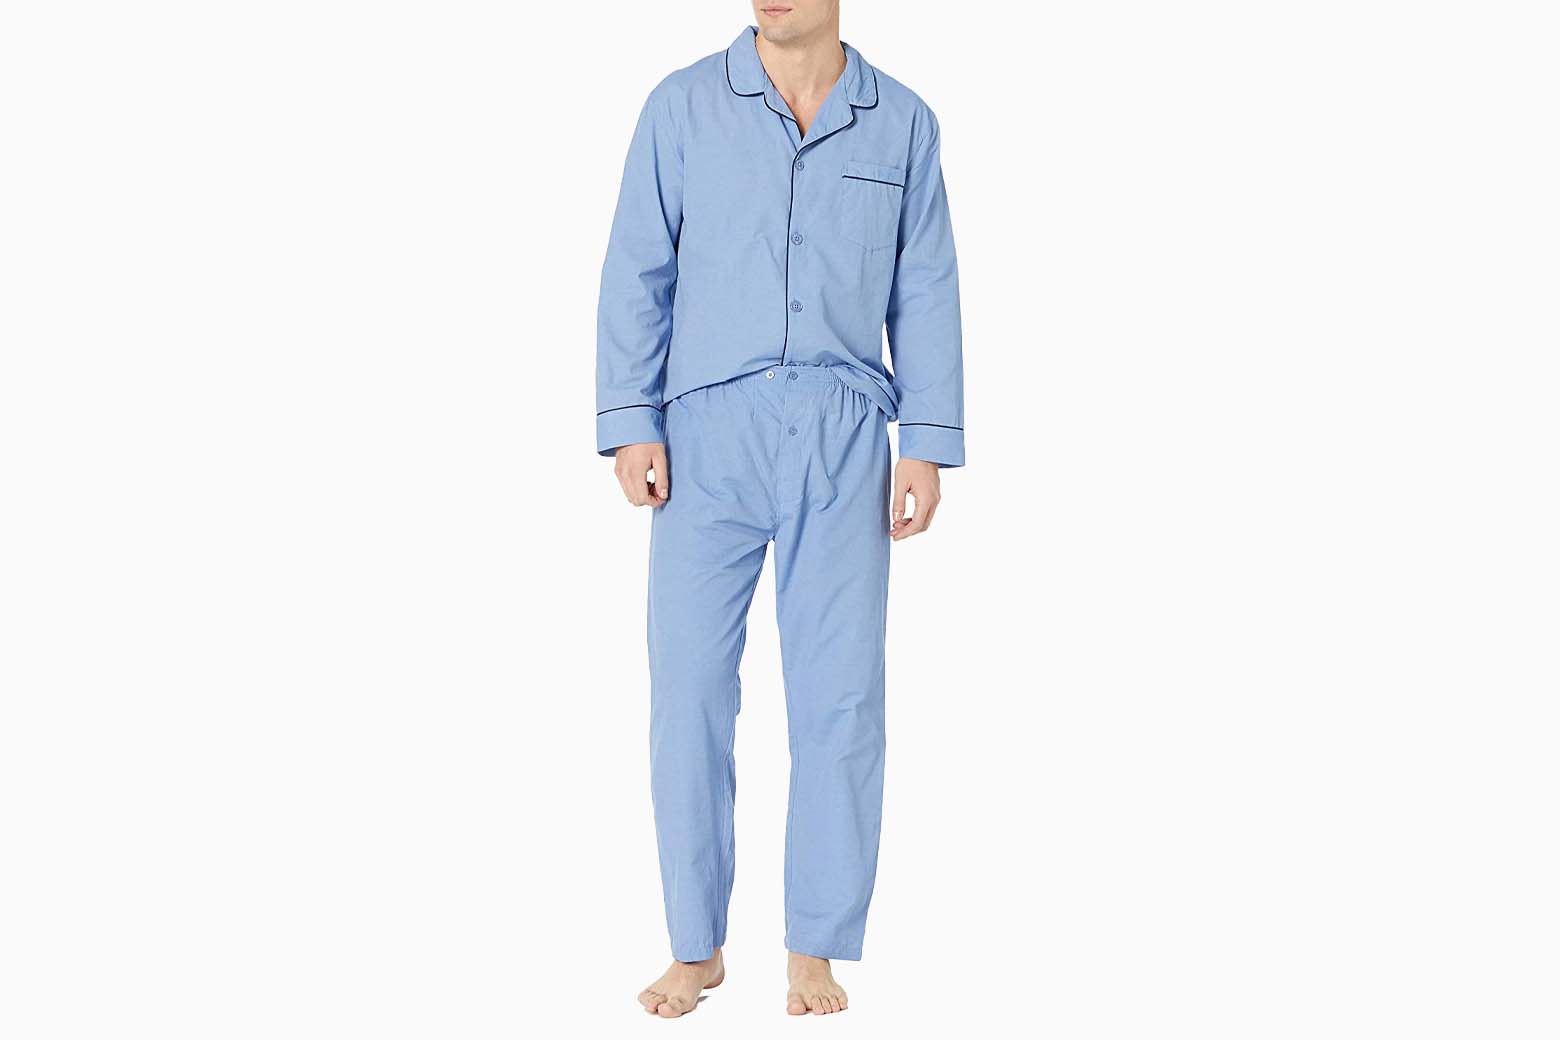 21 Best Men’s Pajamas: Comfy & Stylish Sleepweare